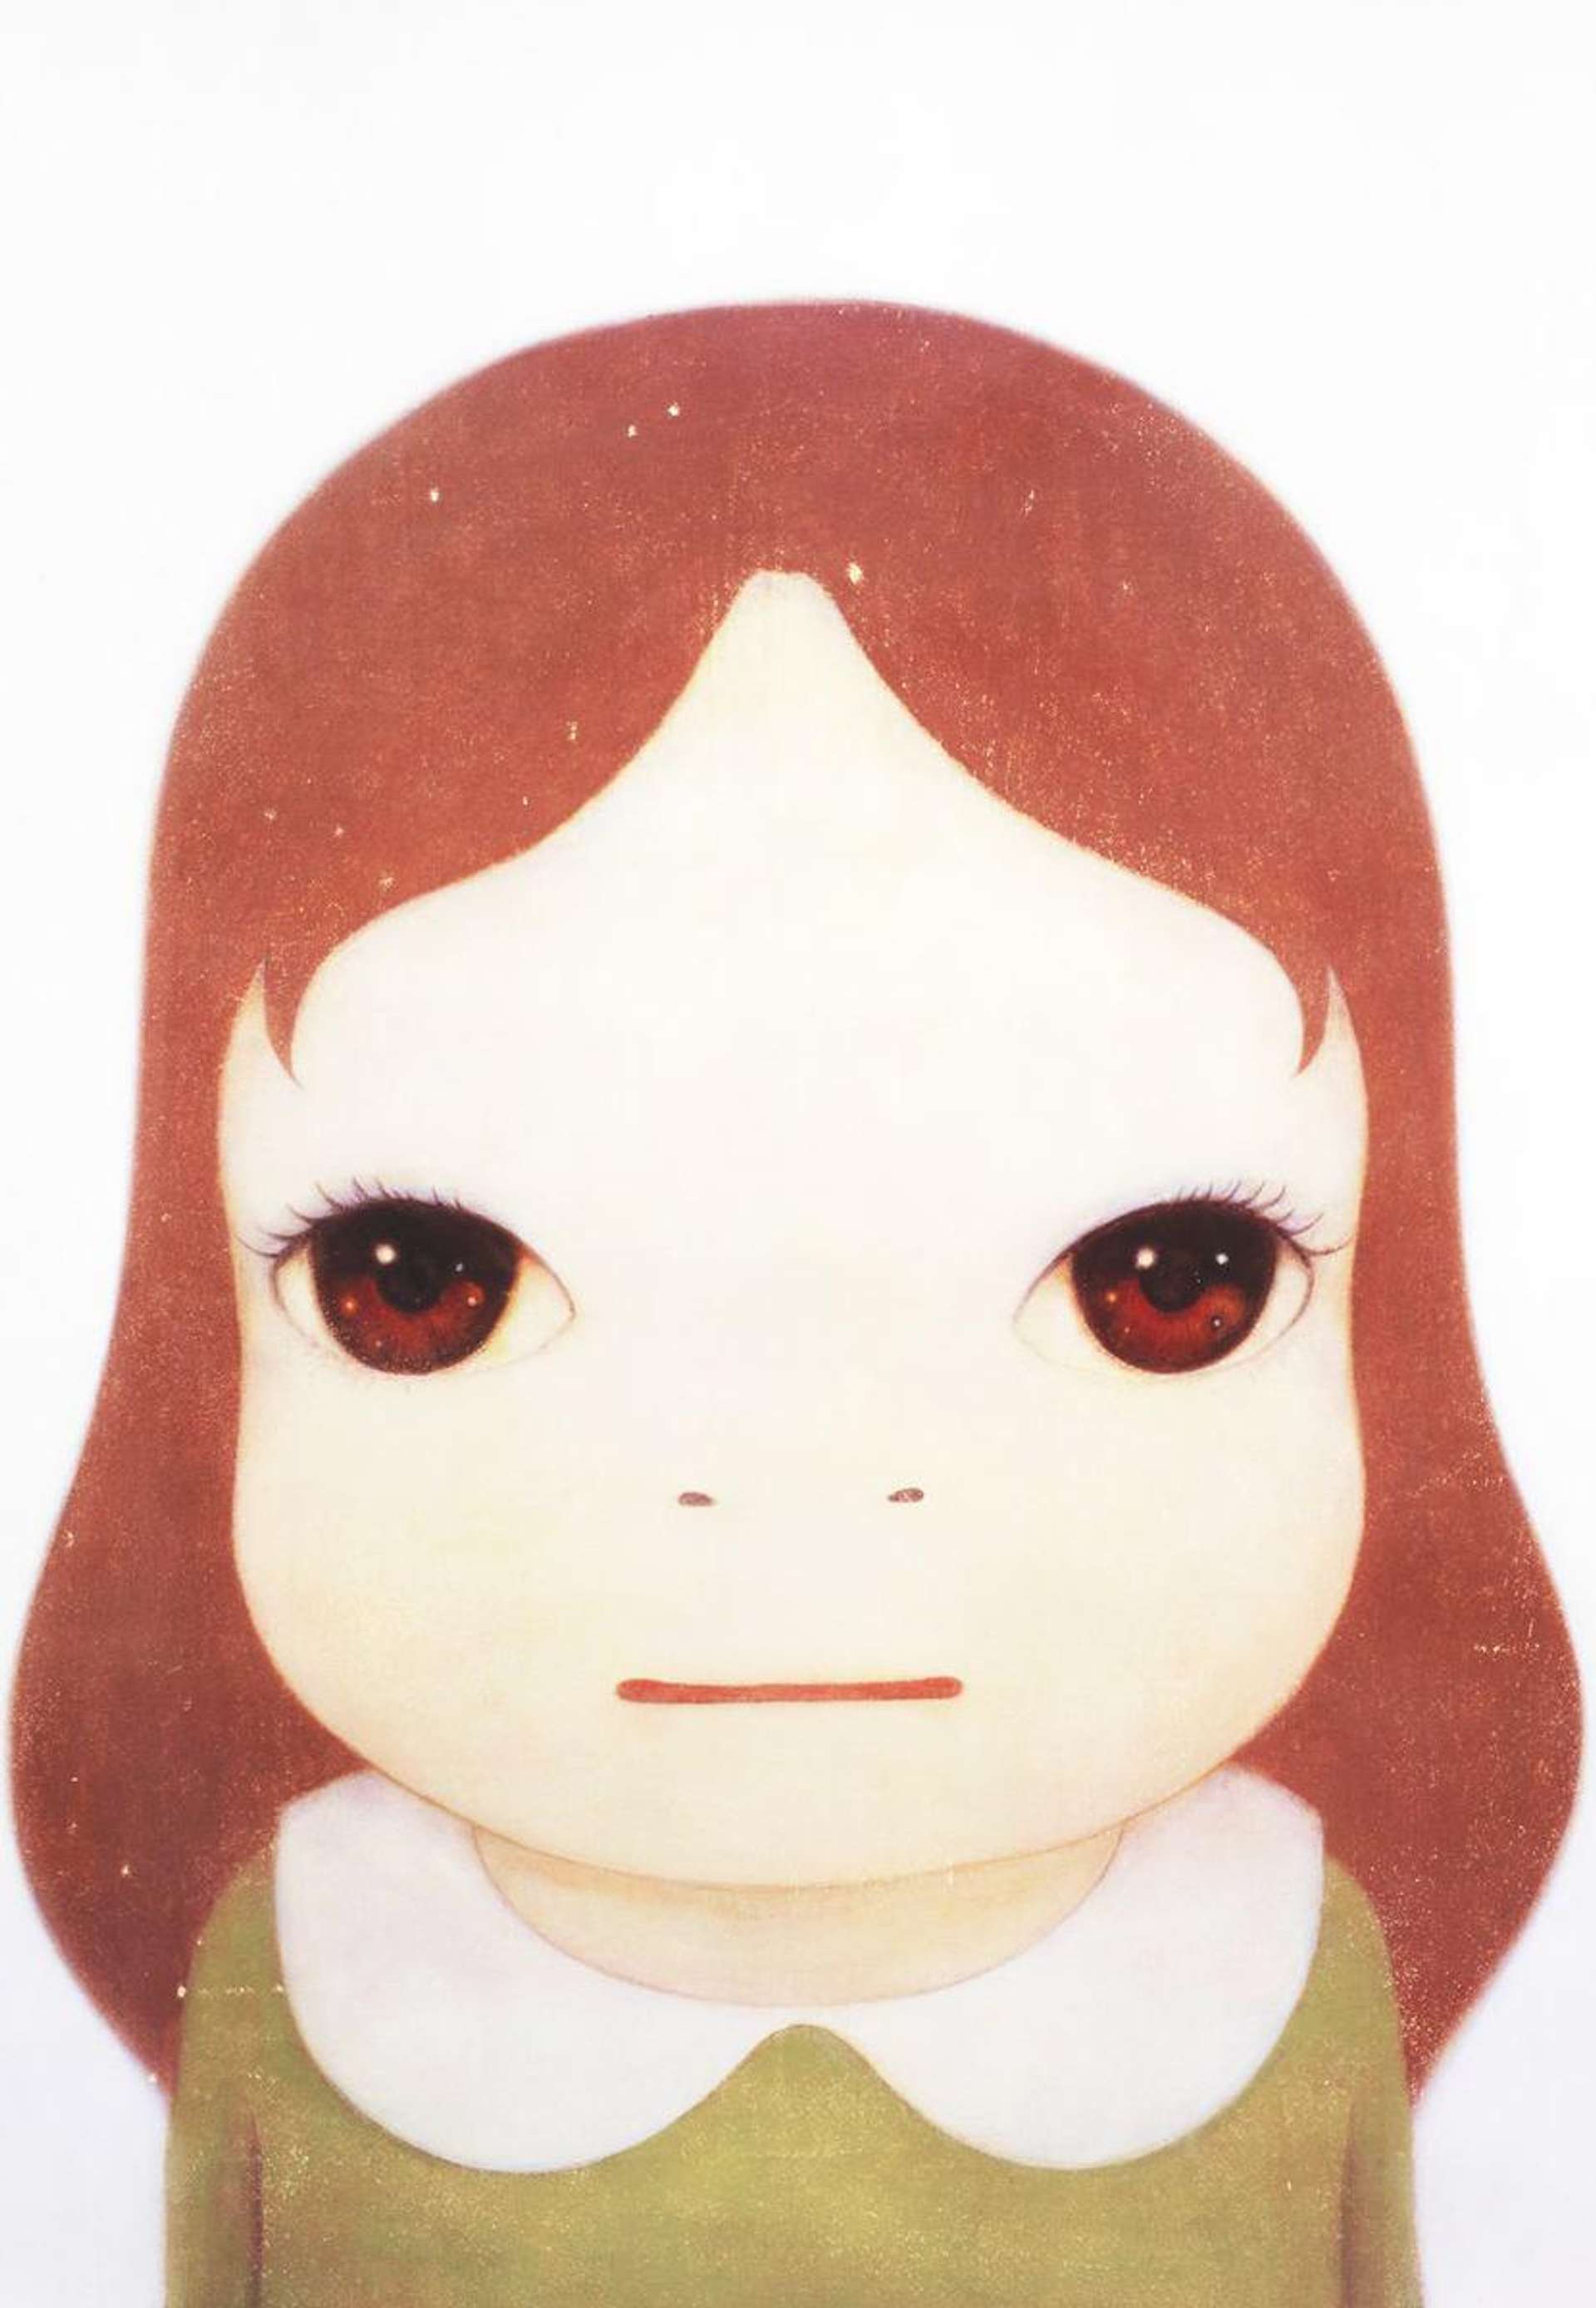 Yoshitomo Nara’s Cosmic Girl Eyes Open: Girl with open eyes